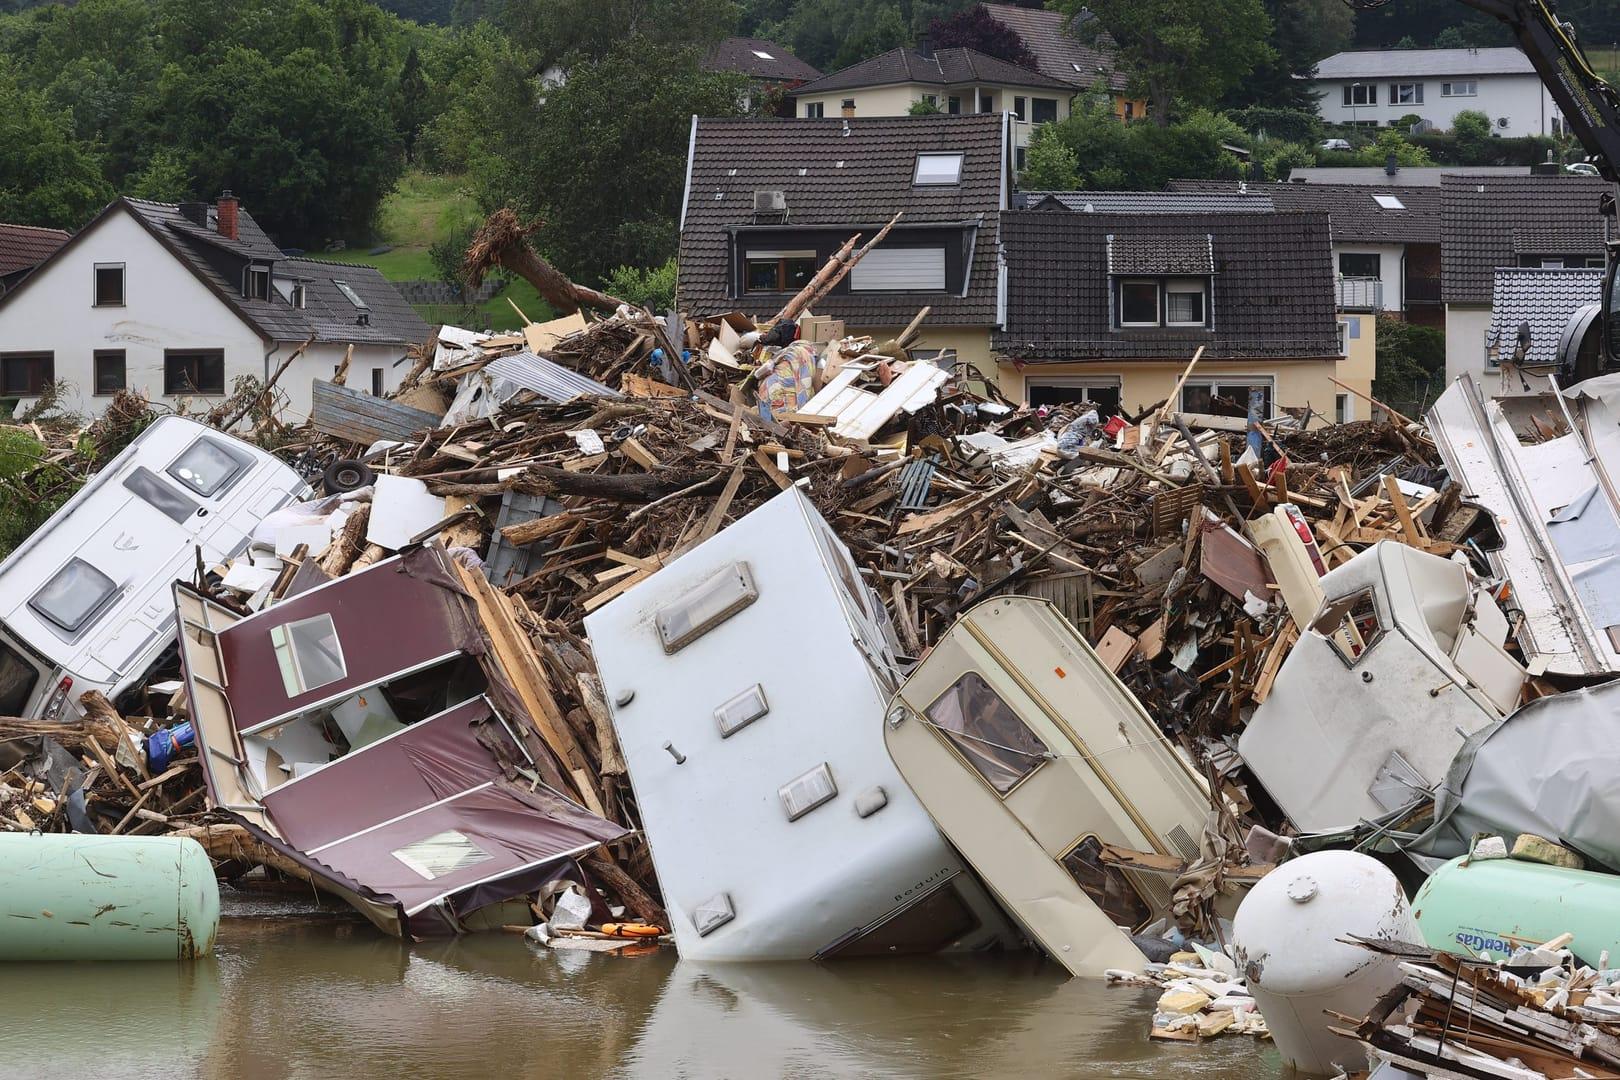 German floods ‘more like World War II’ than natural disaster, Catholic expert says